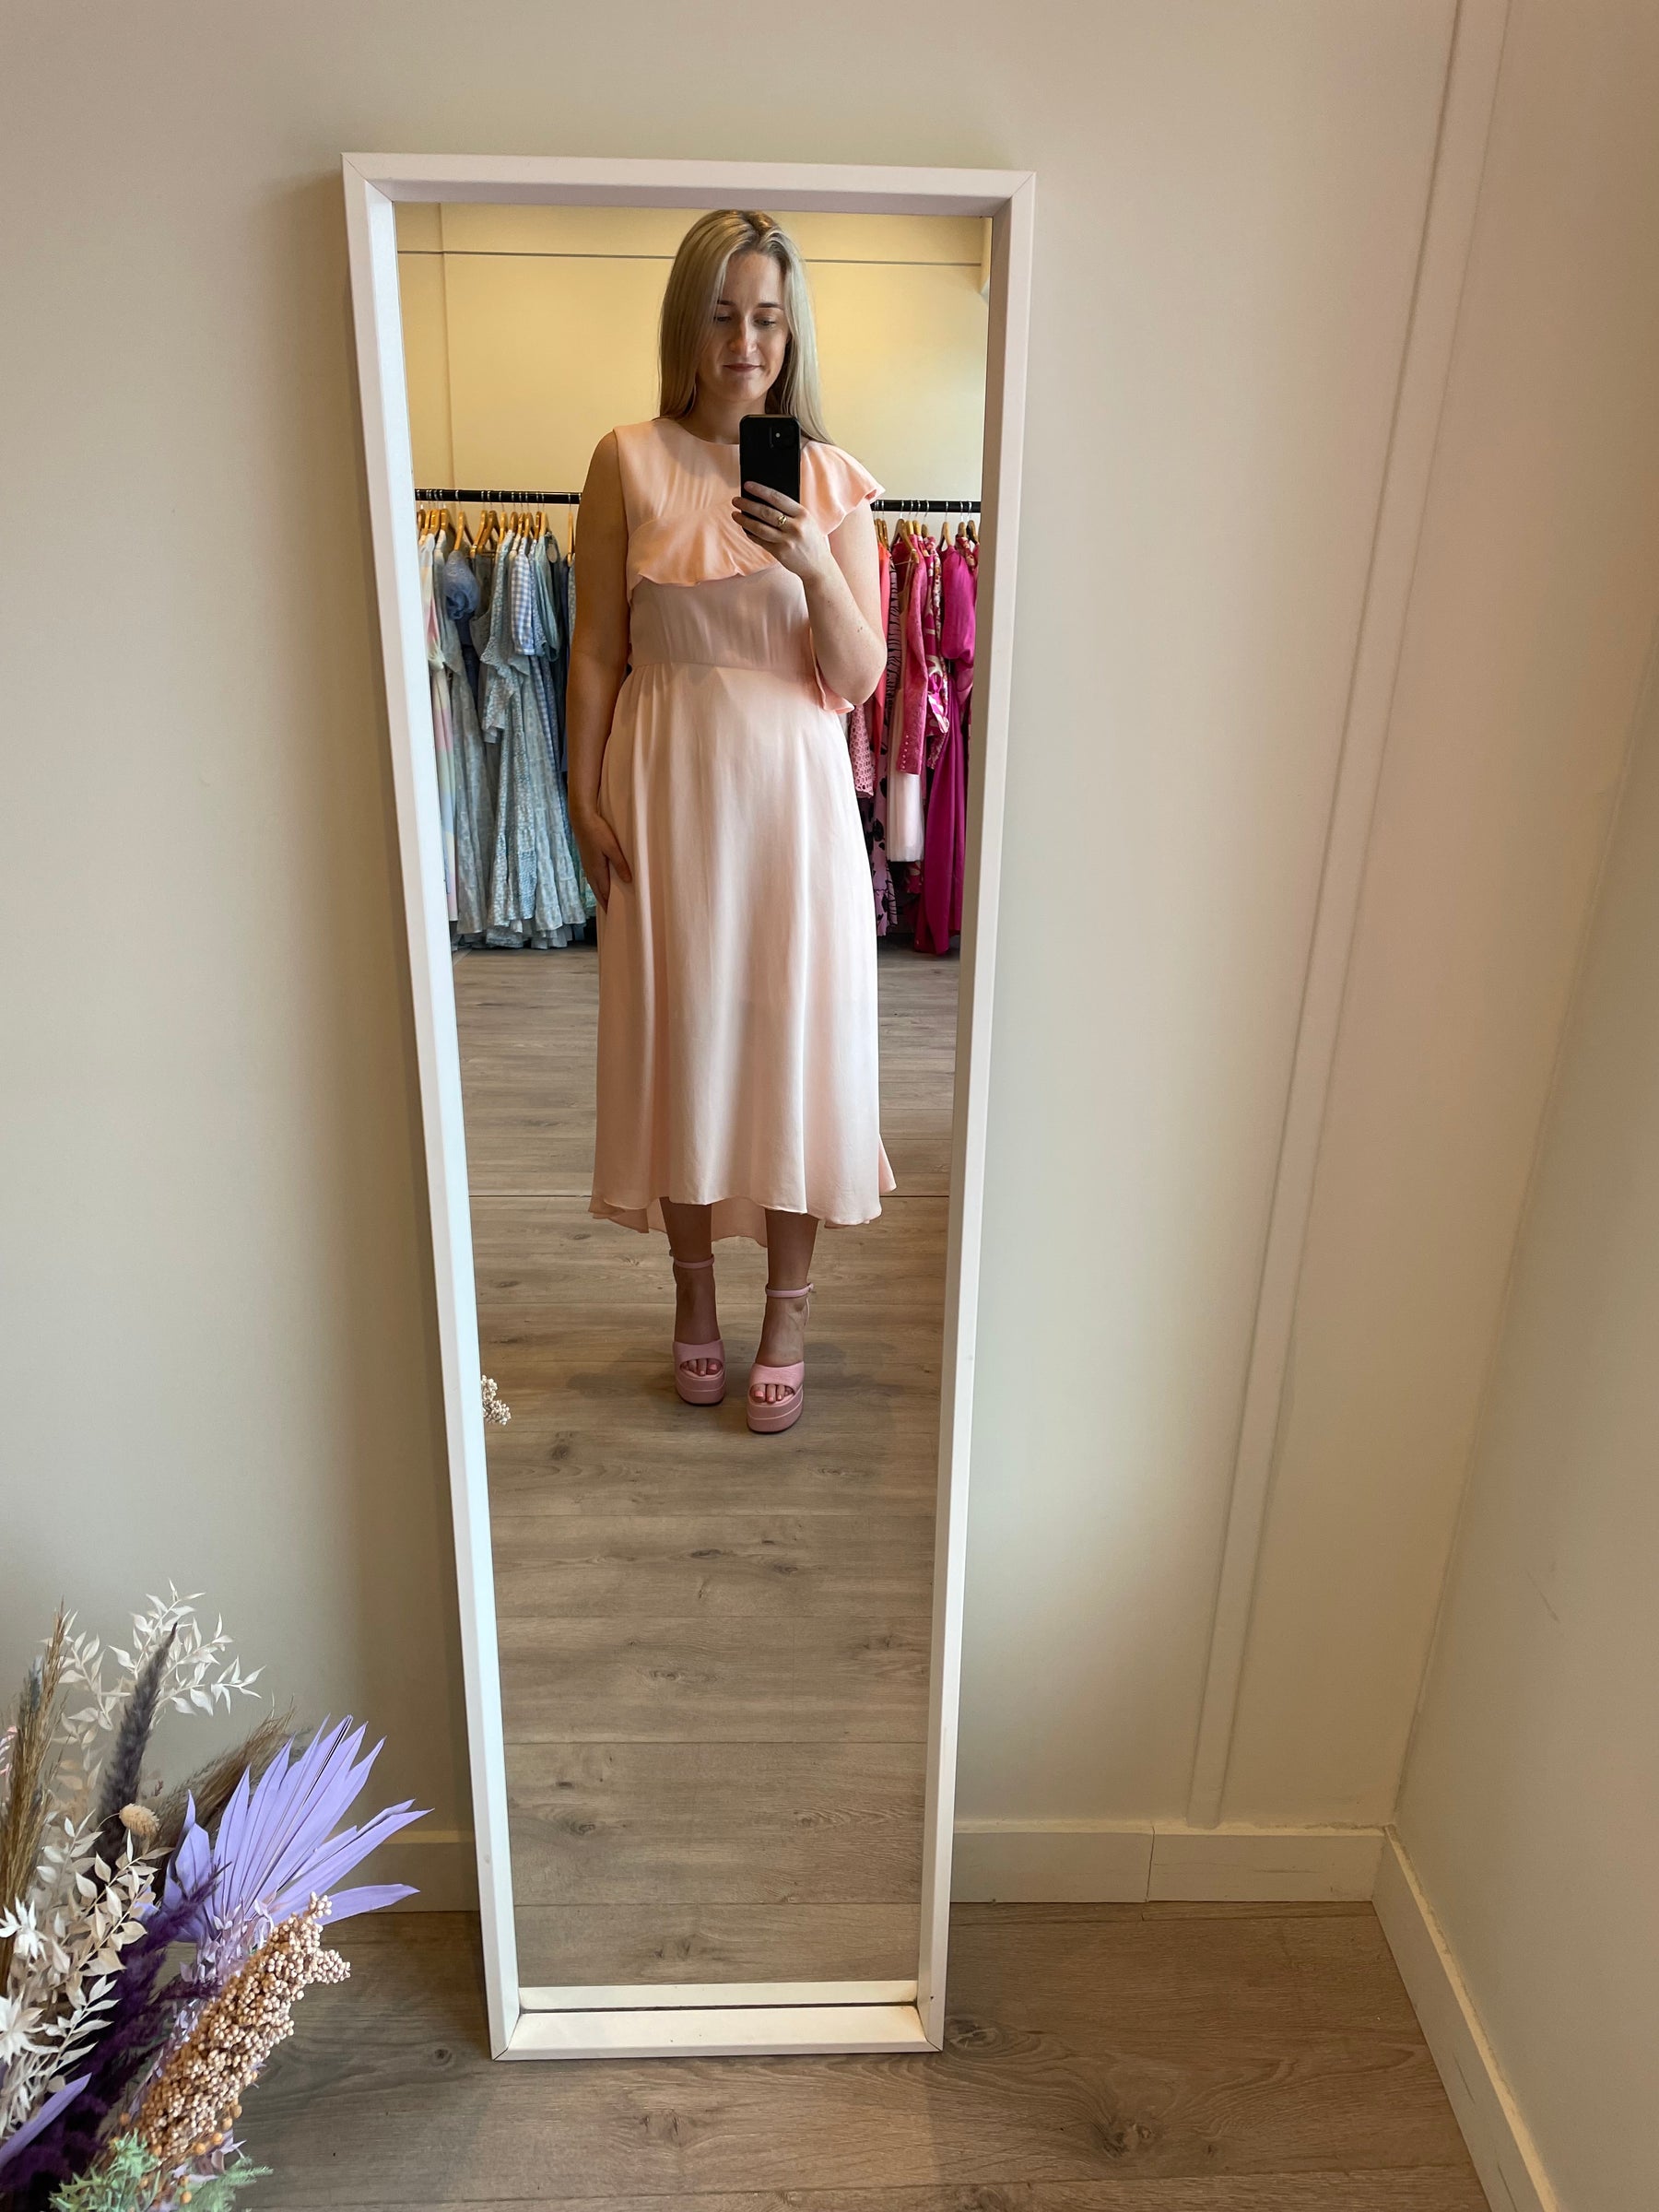 Maje Pink Asymmetric Riviera Dress